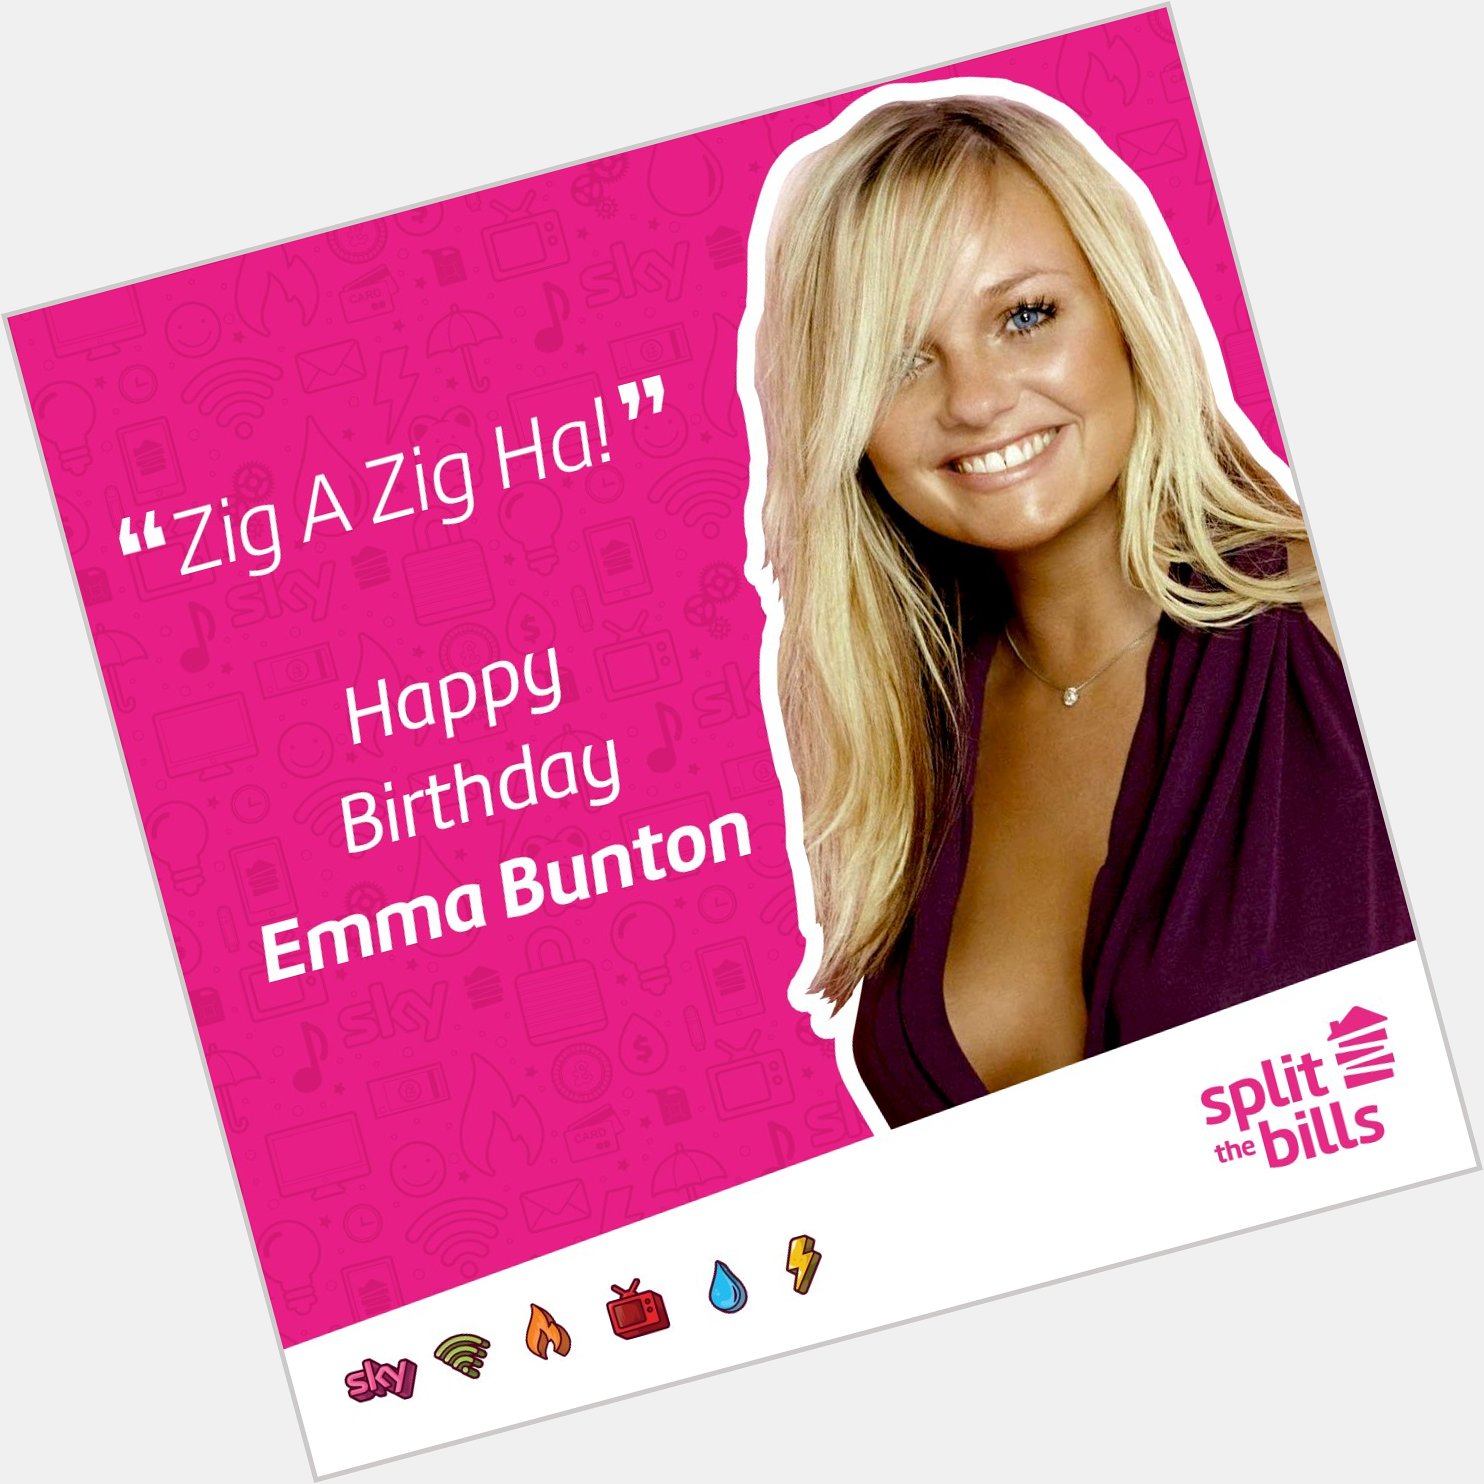 Happy Birthday to Emma Bunton who turns 41 today! 